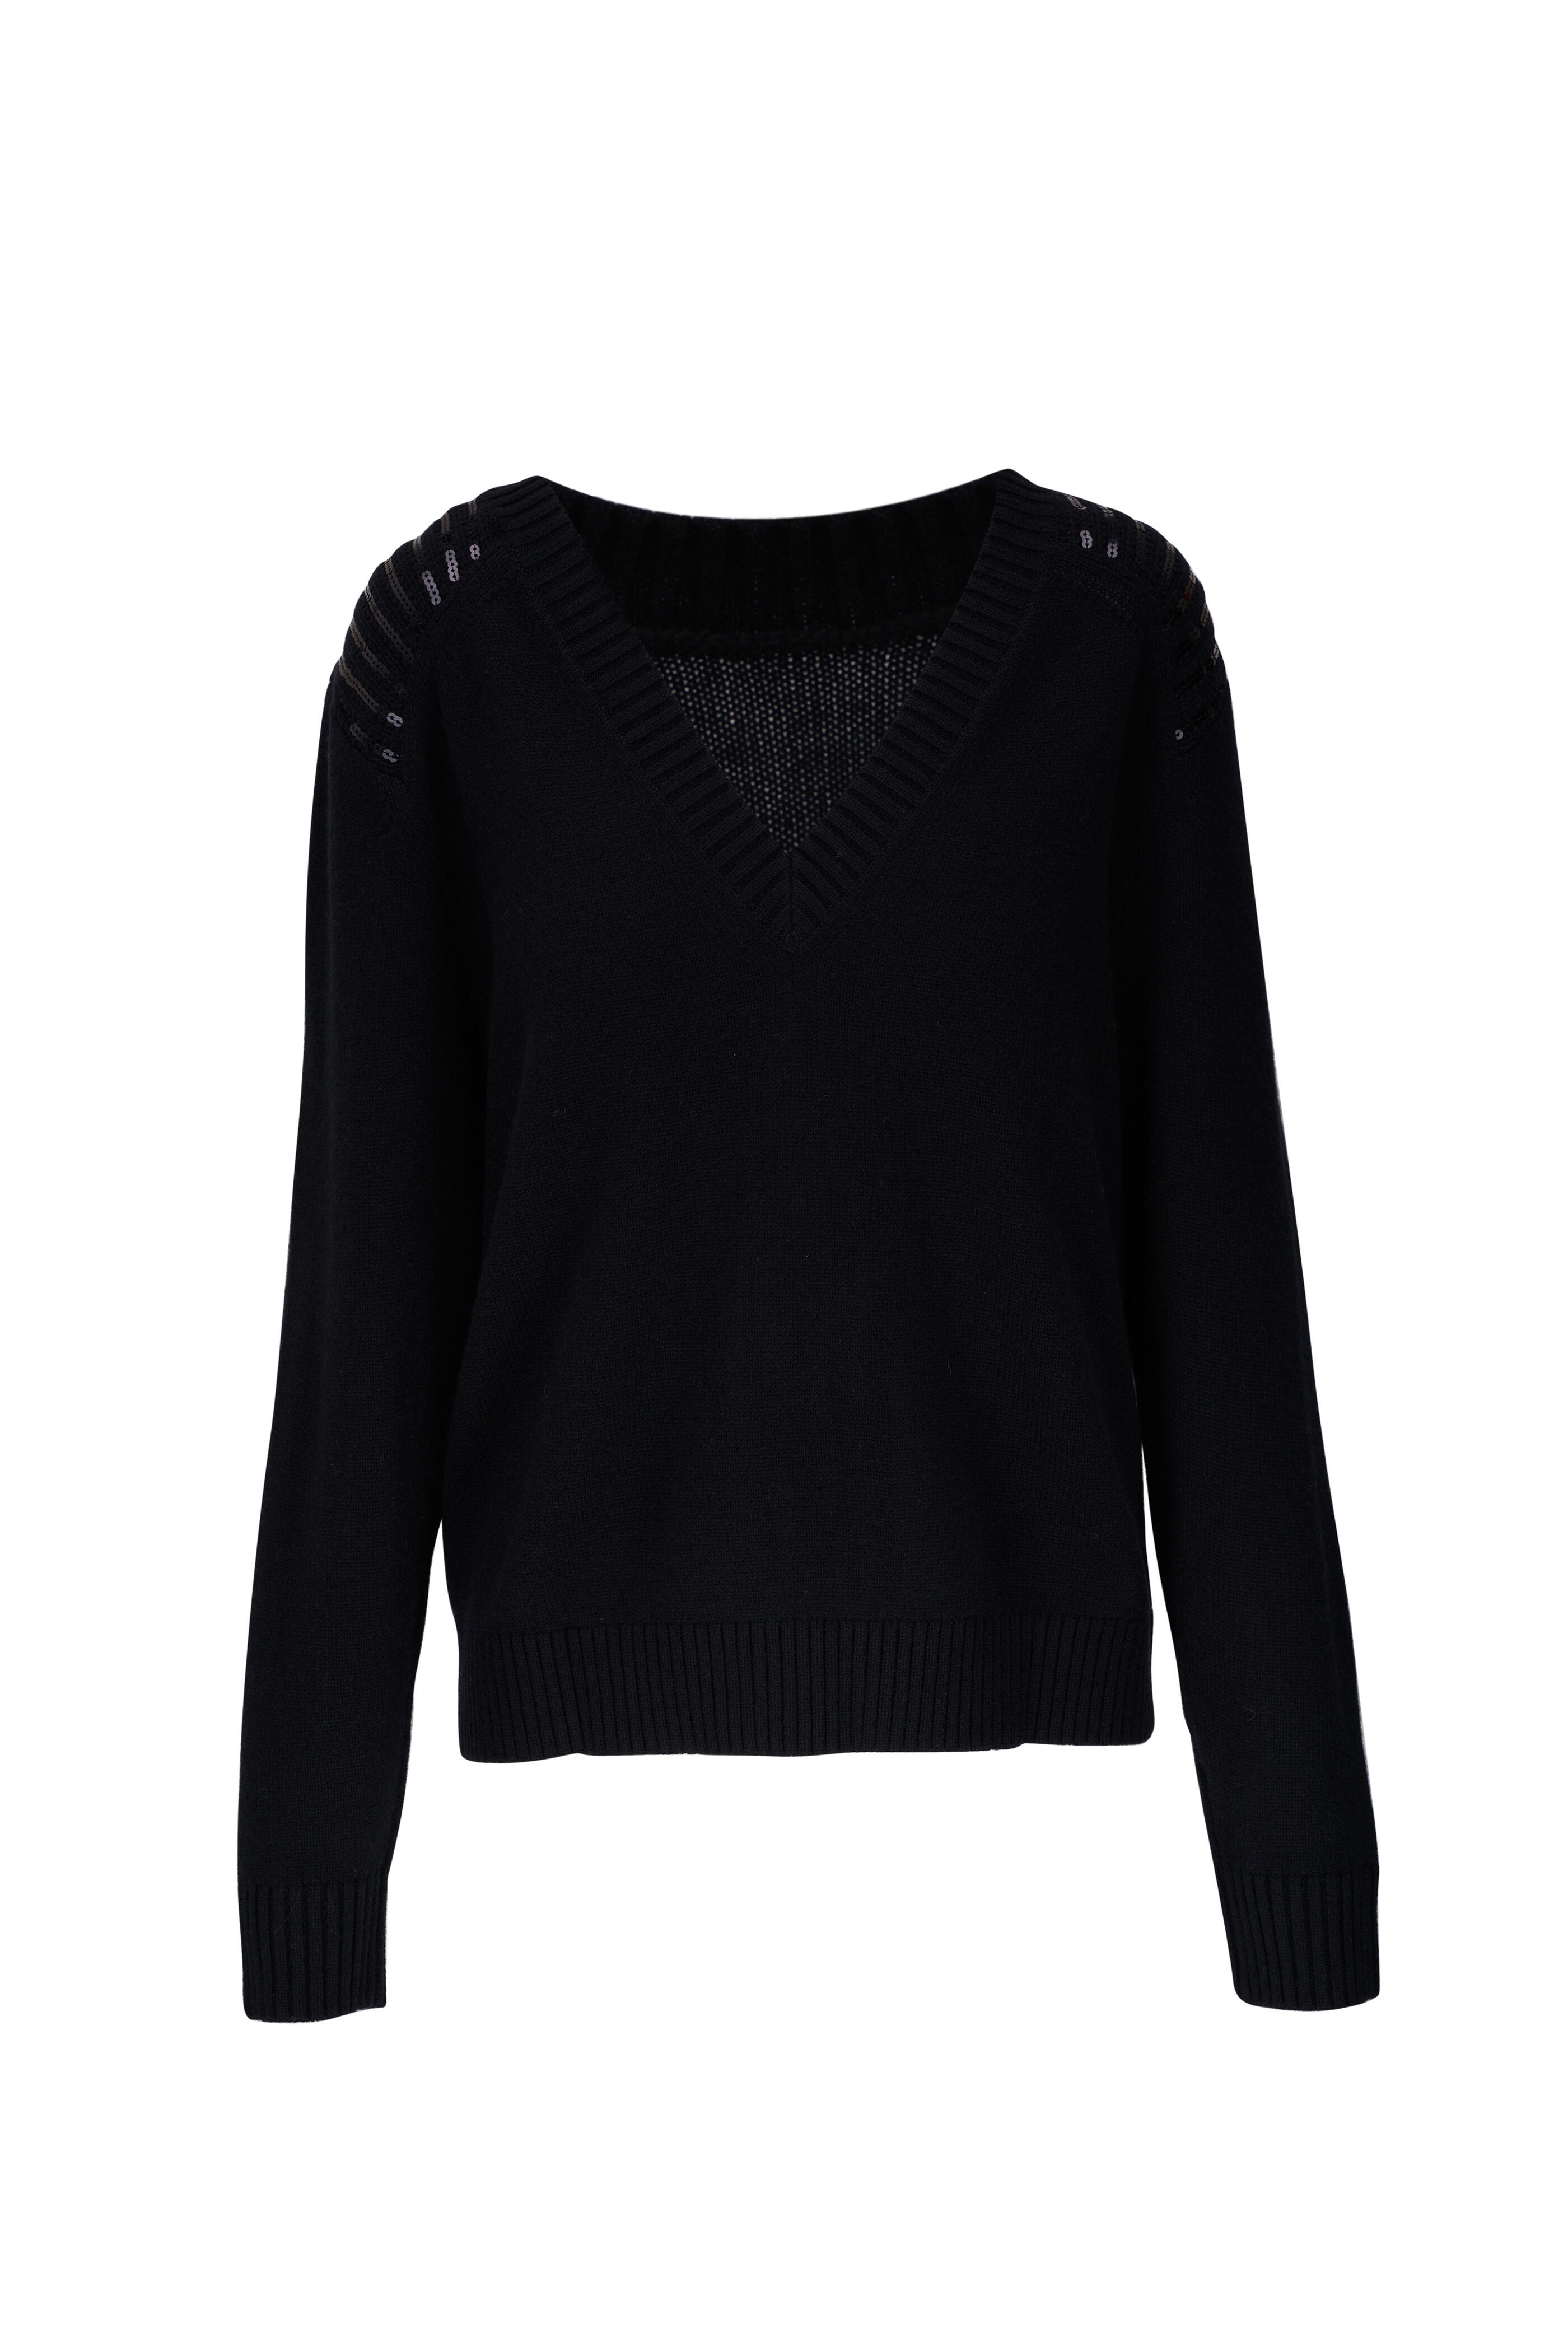 Dorothee Schumacher - Black Sequin V-Neck Sweater